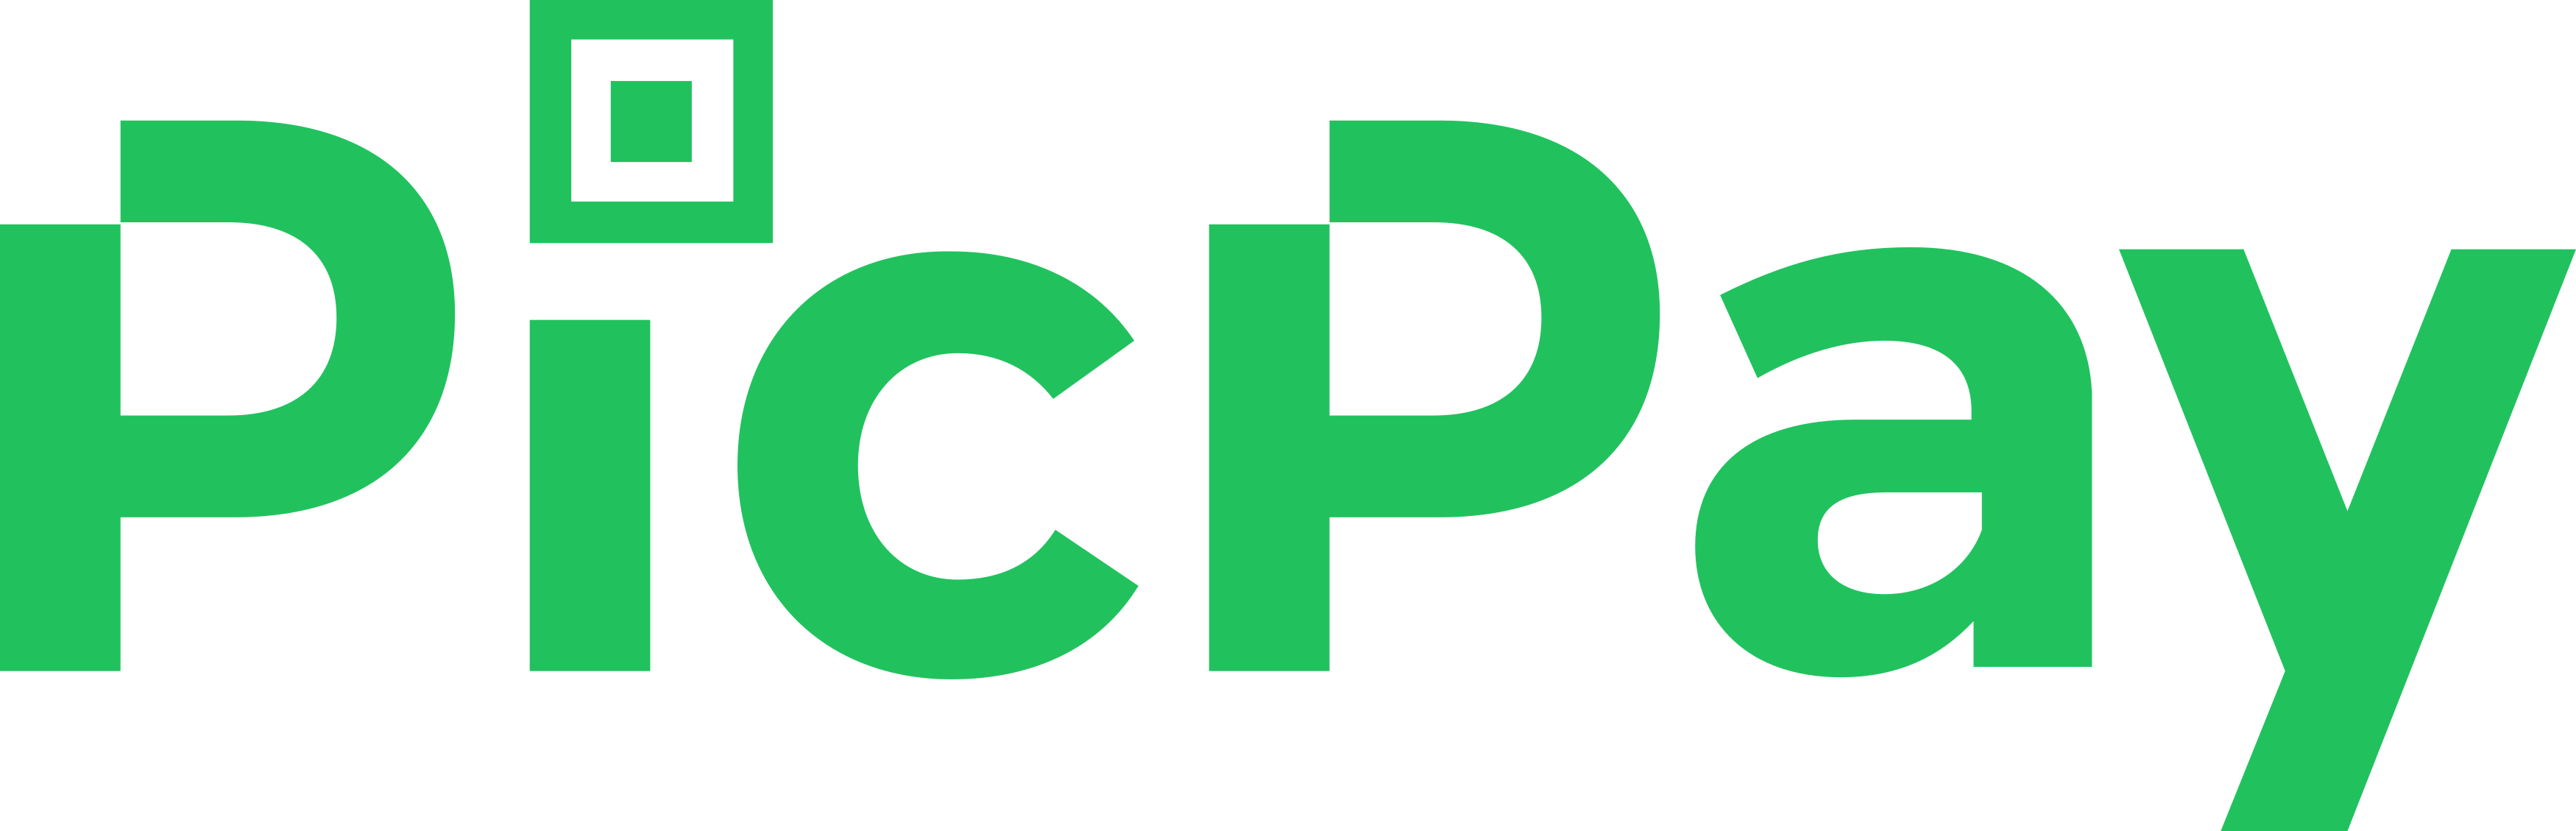 Picpay-logo